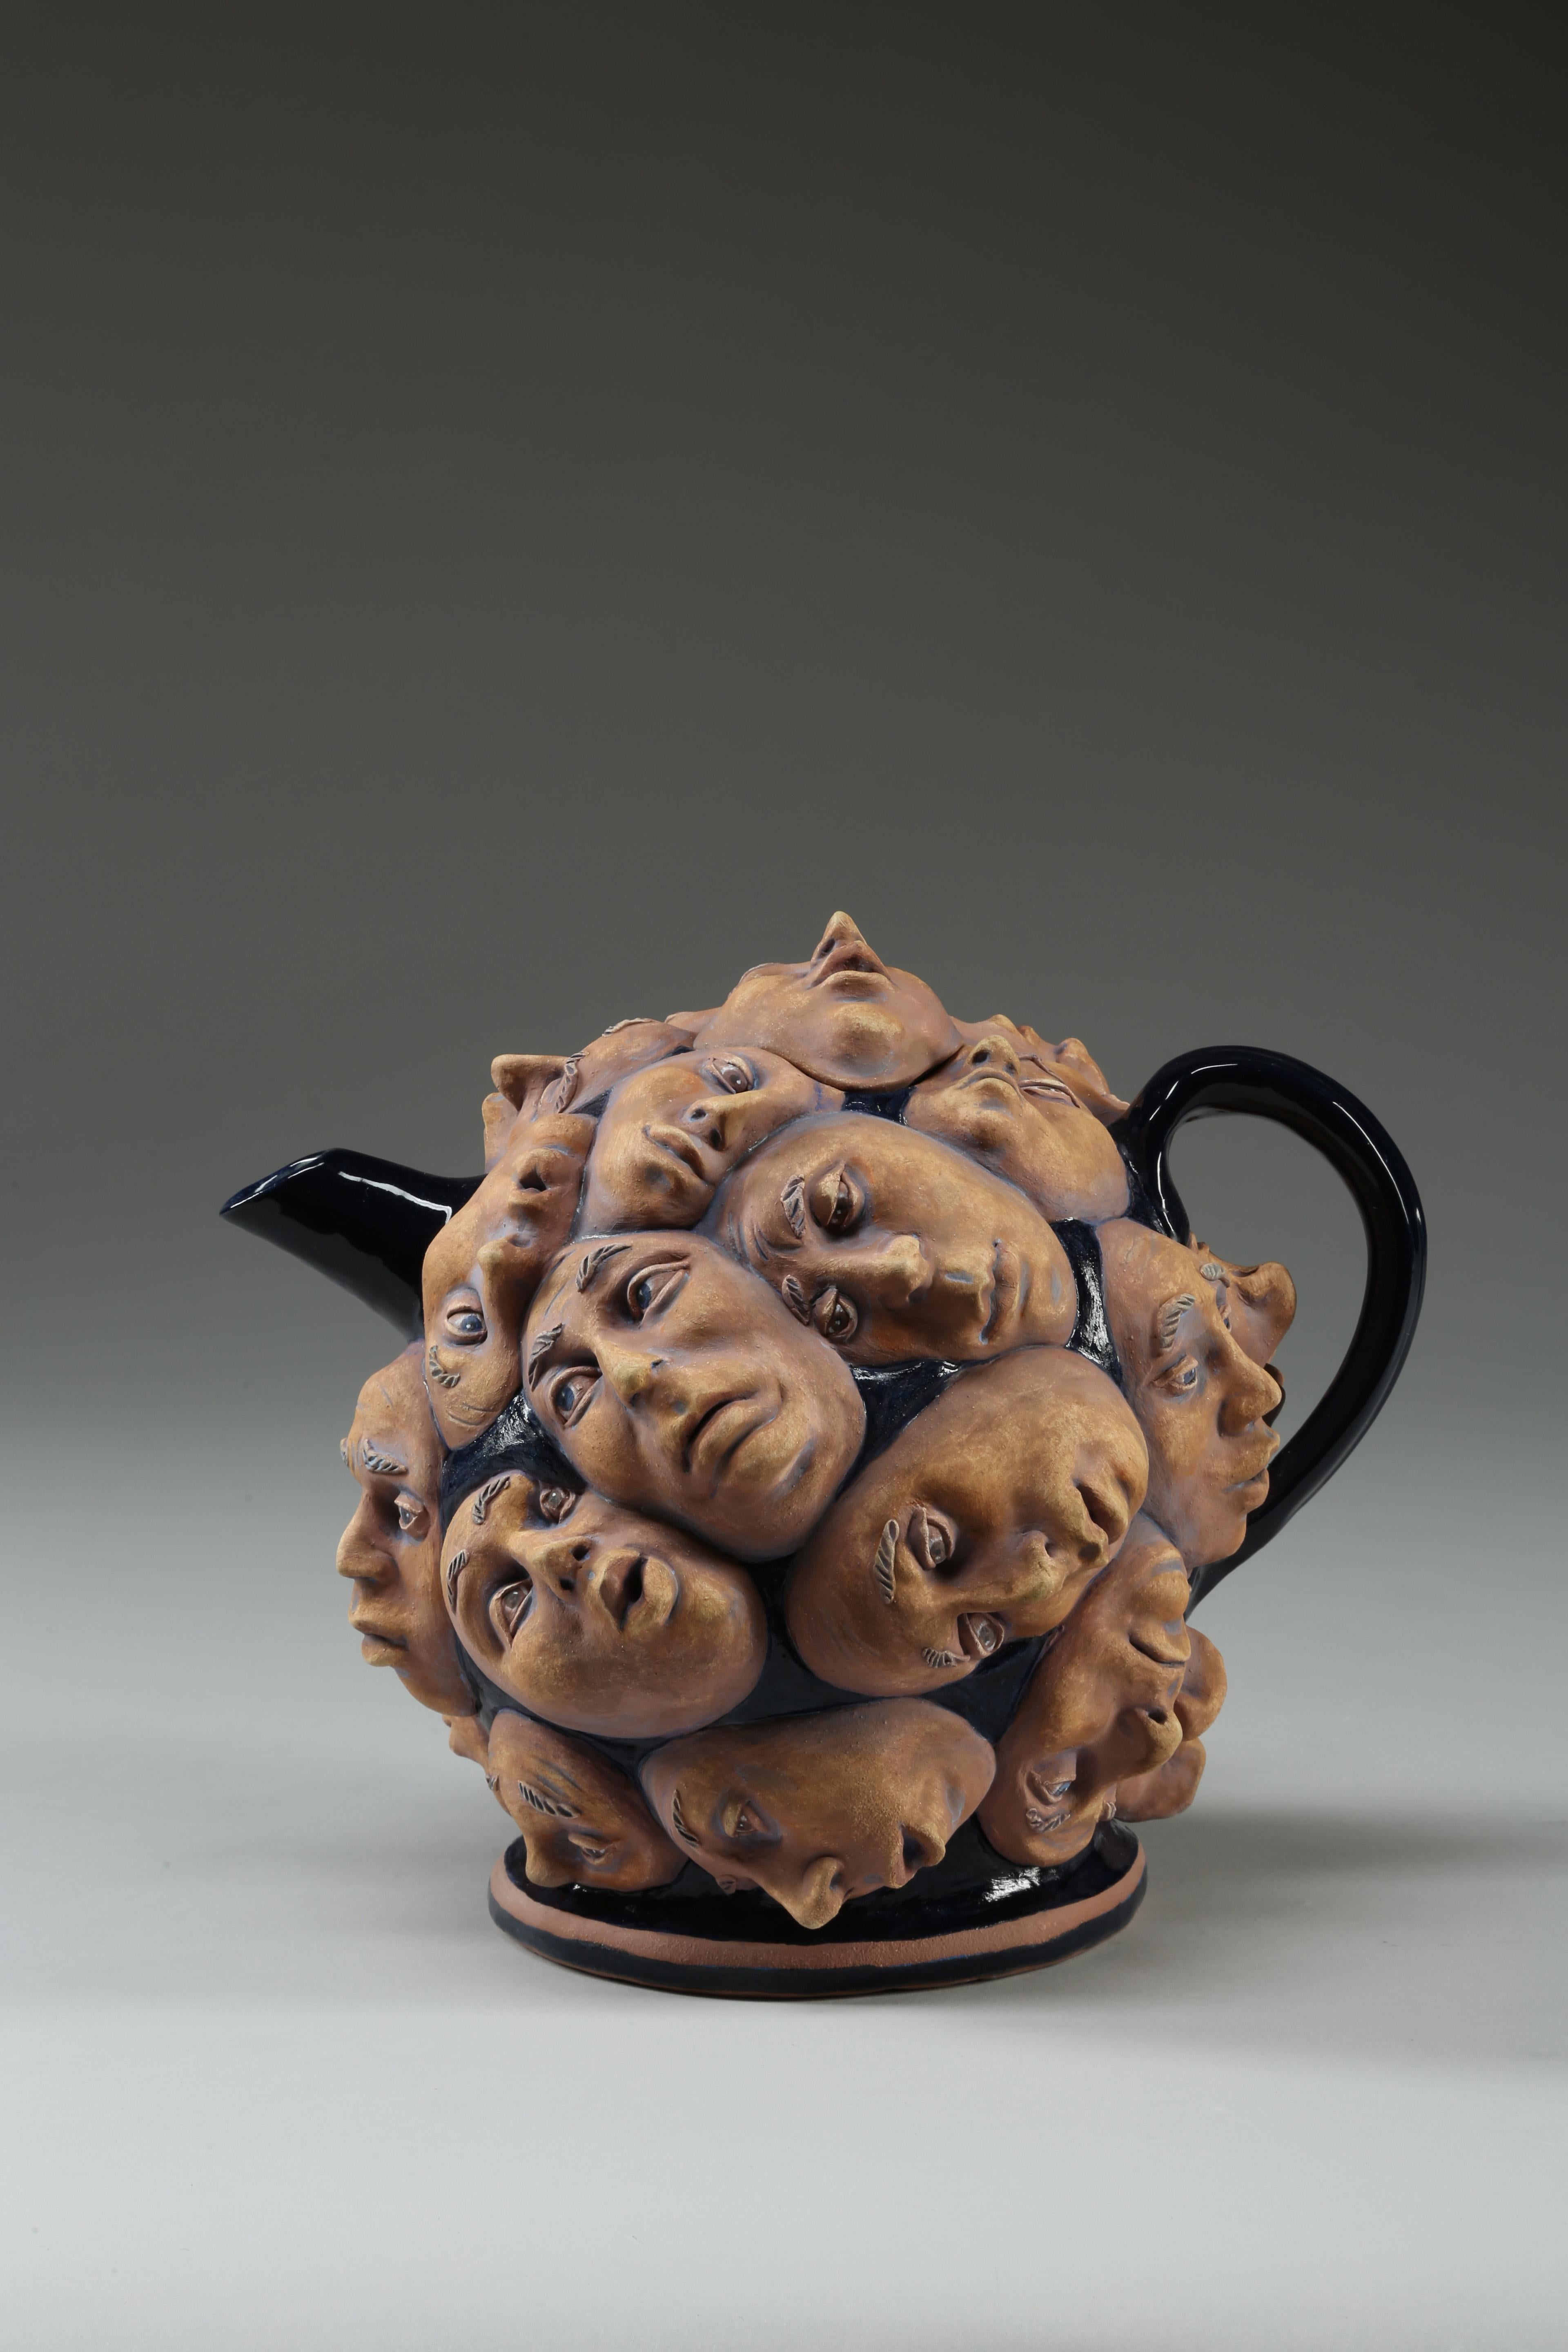 Beverly Mayeri Figurative Sculpture – „Crowded Teapot““, zeitgenössisch, Keramik, Skulptur, funktional, Acrylpigment